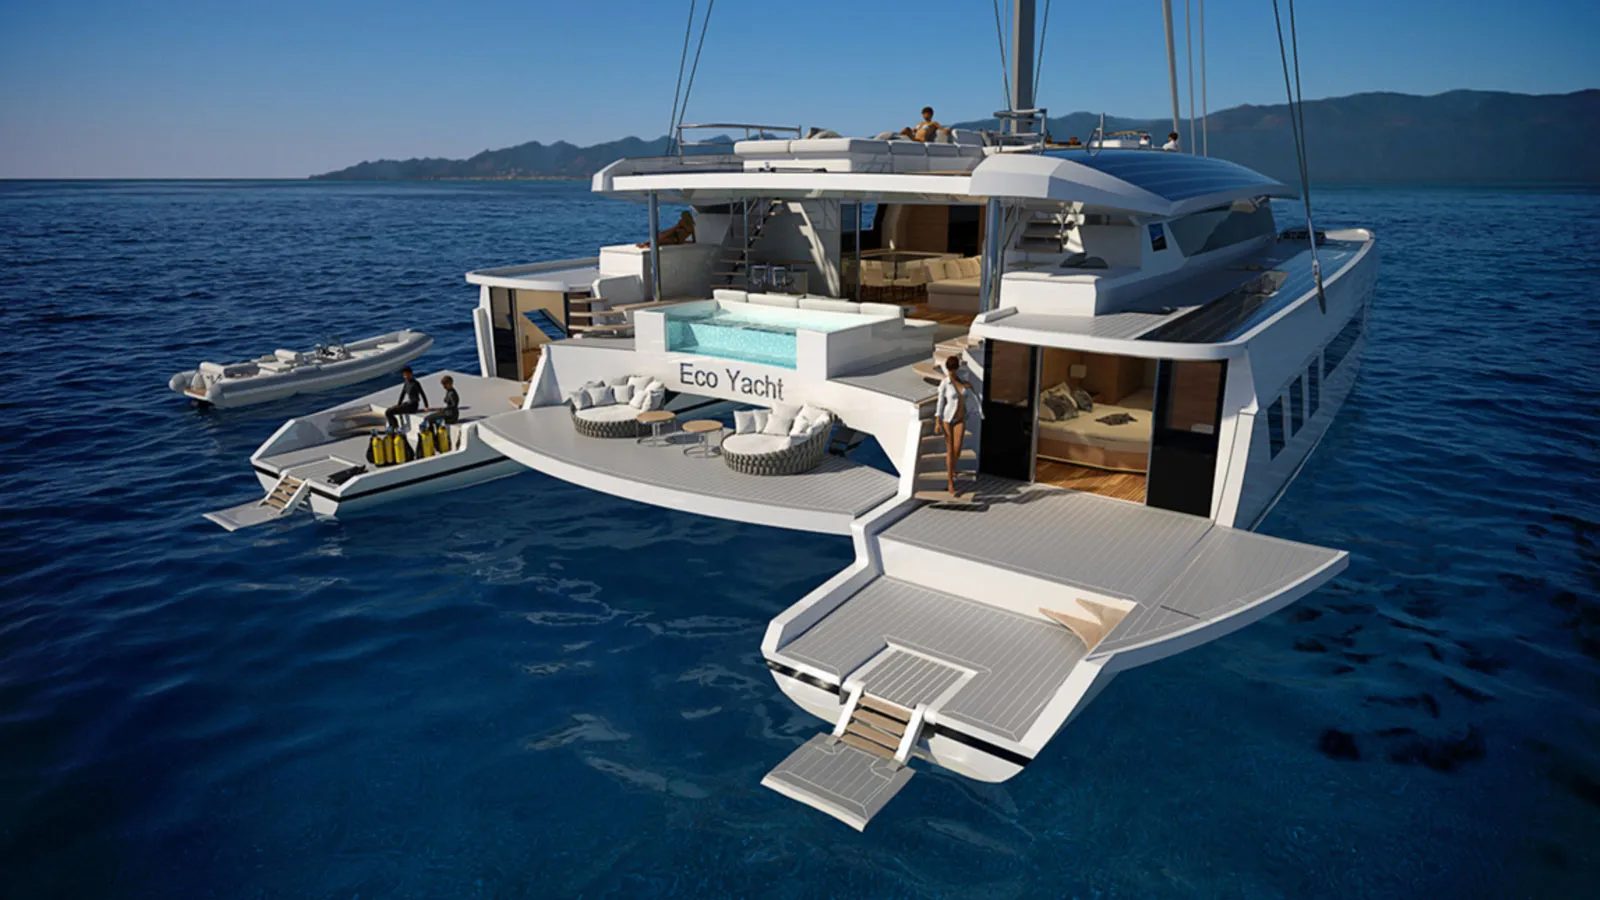 Pajot e Wider catamarã Eco Yacht - boat shopping